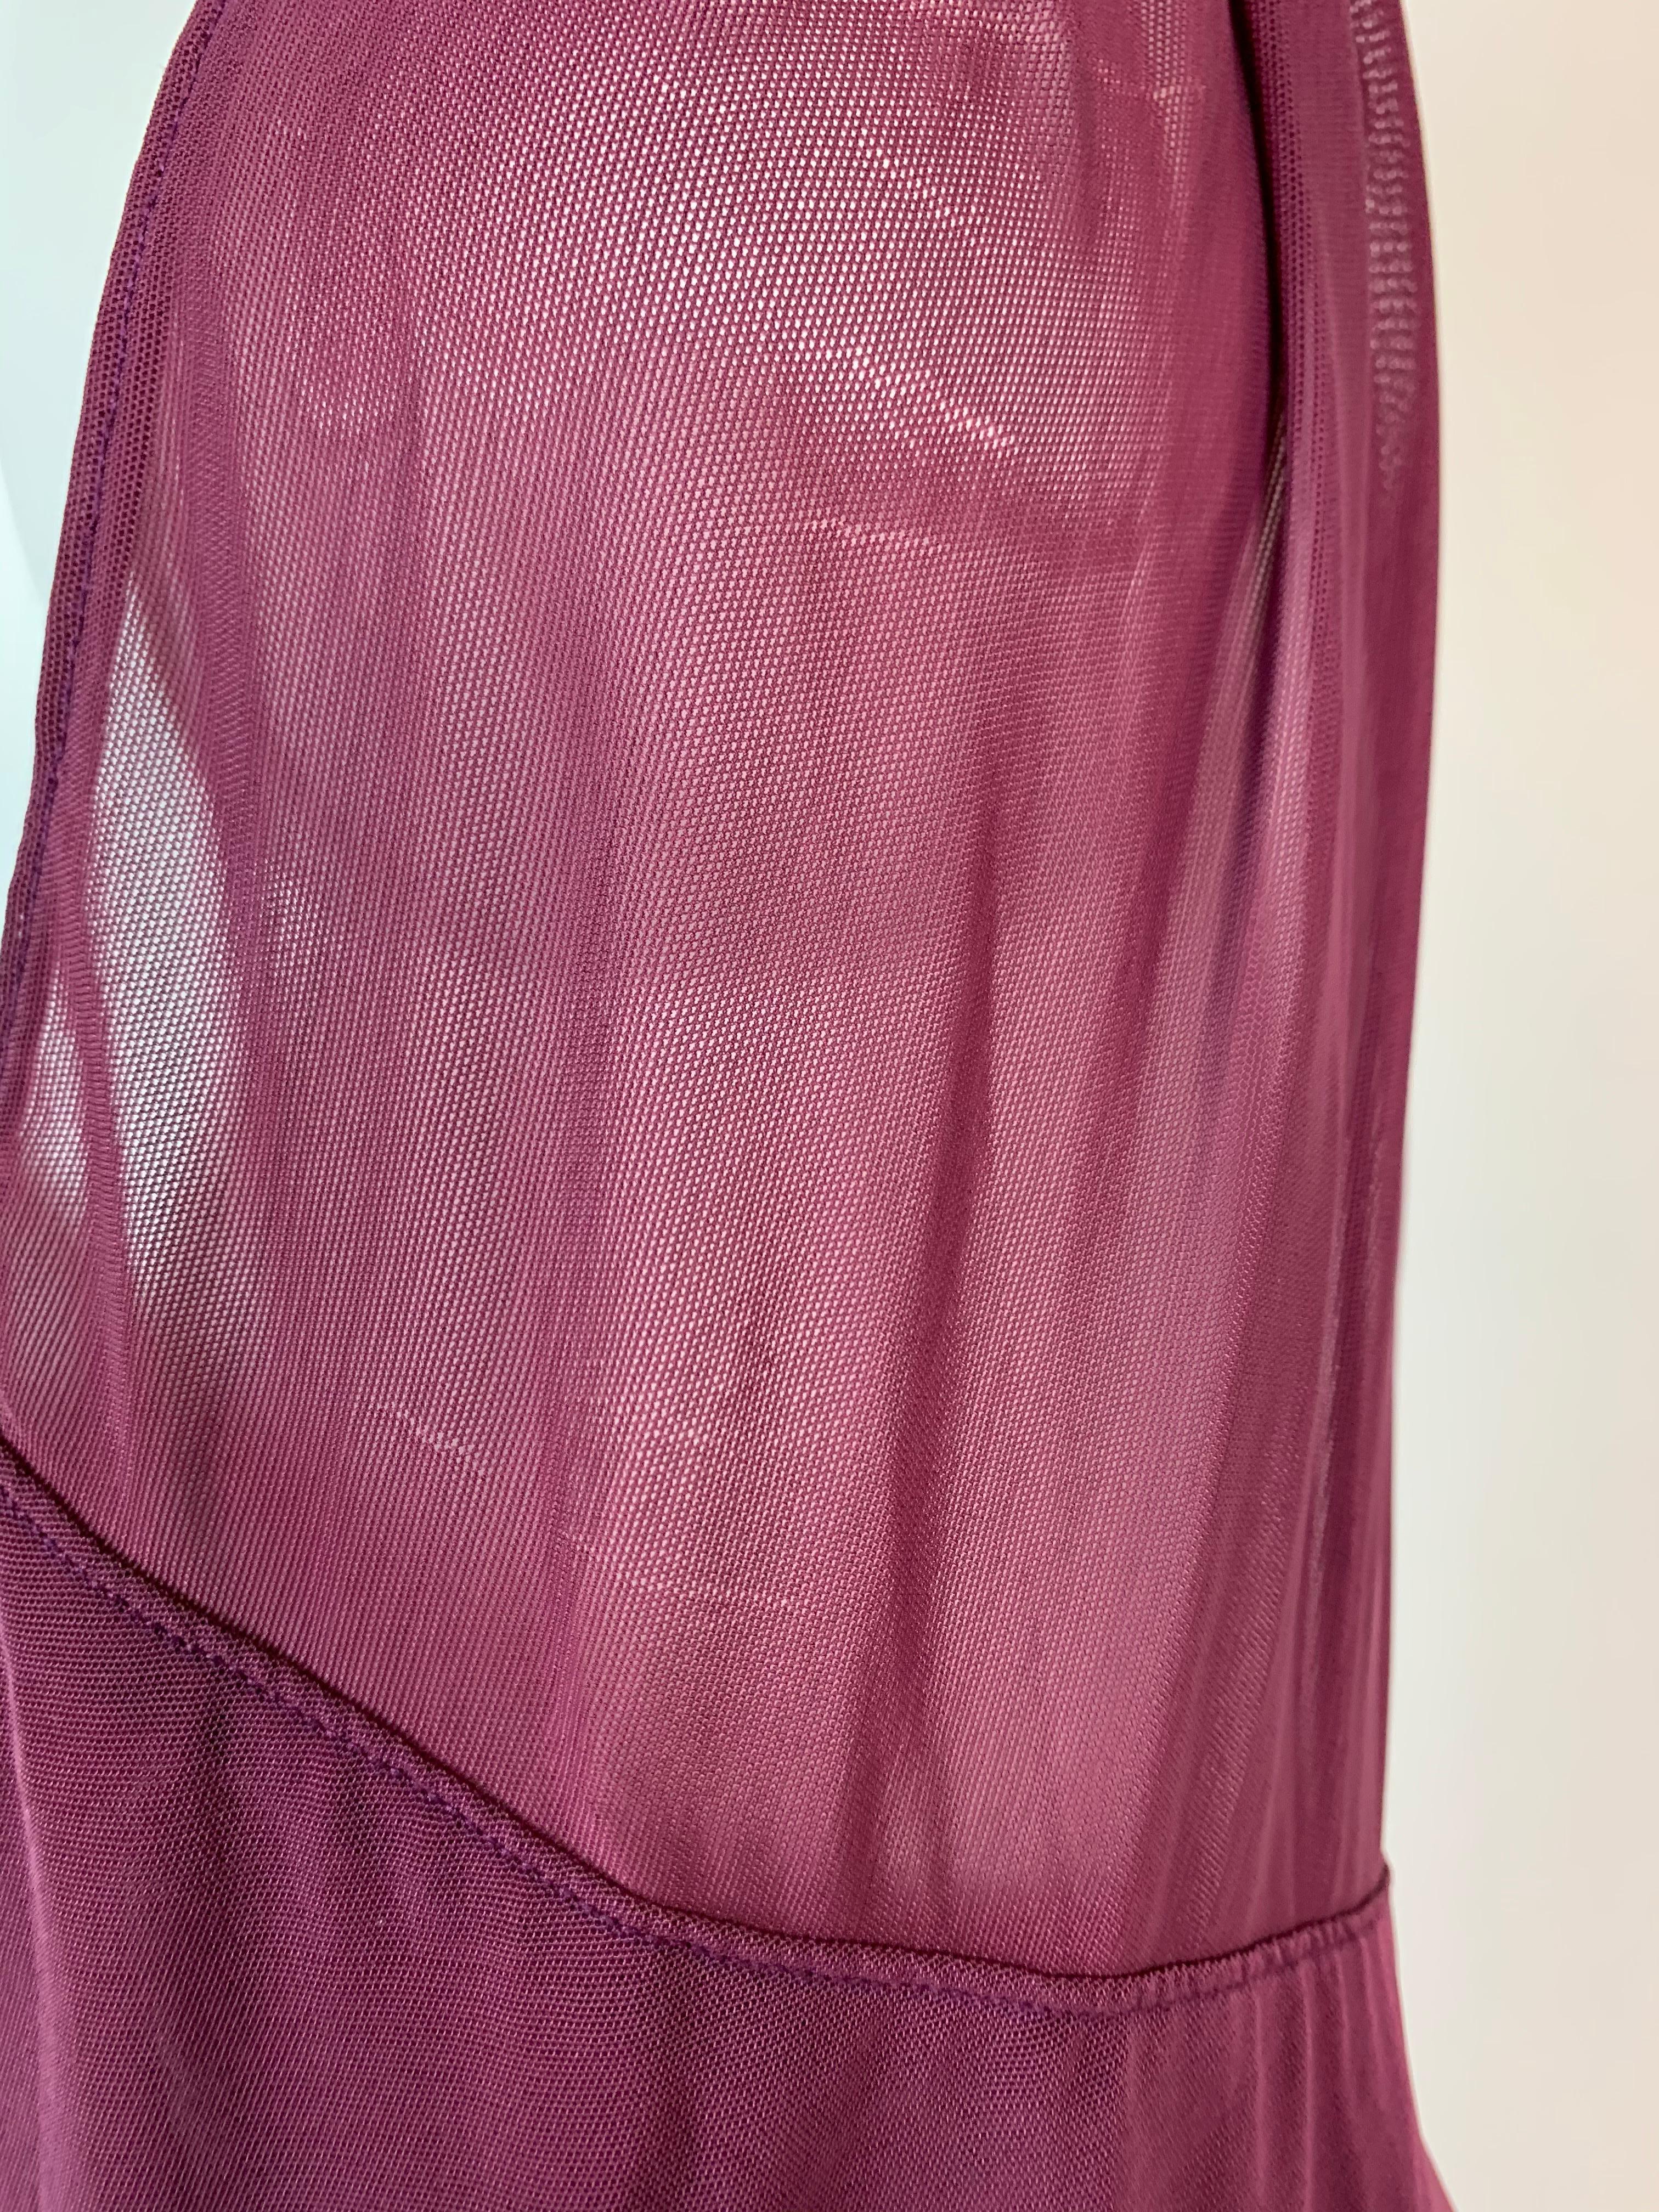 S/S 2001 Christian Dior John Galliano Sheer Burgundy Mesh Plunging Maxi Dress In Good Condition In Yukon, OK